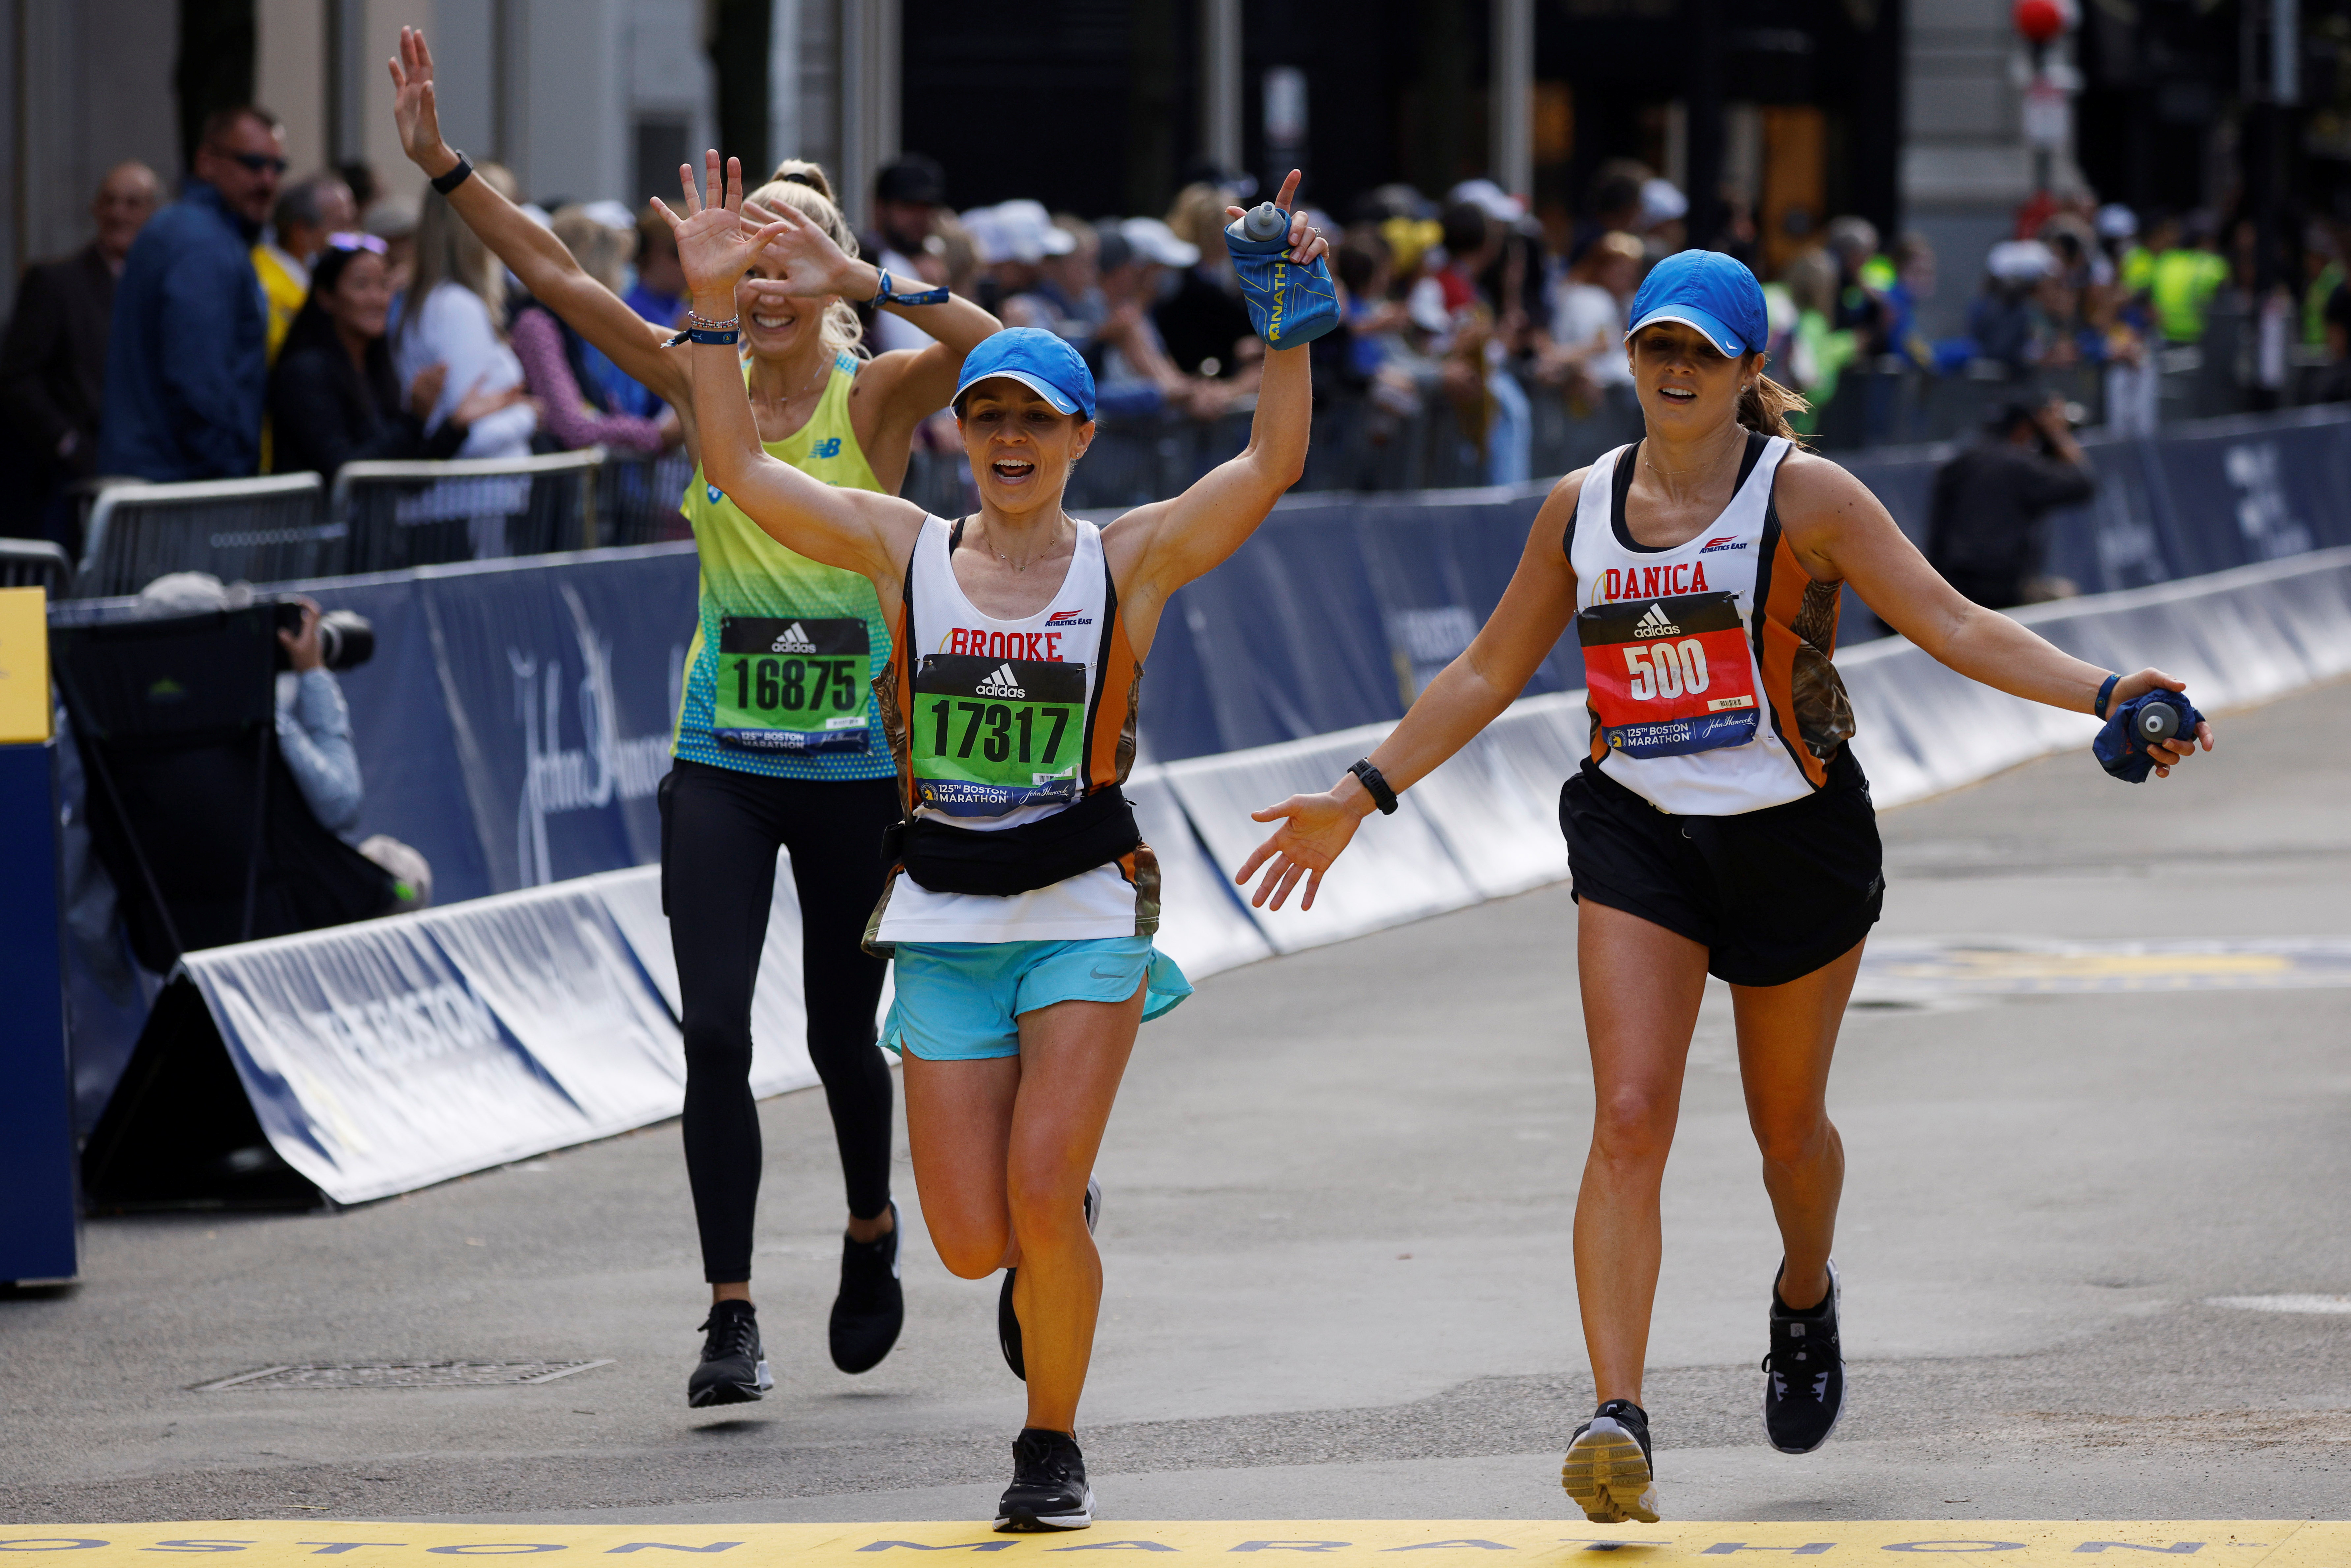 The 125th running of the Boston Marathon is held in Boston